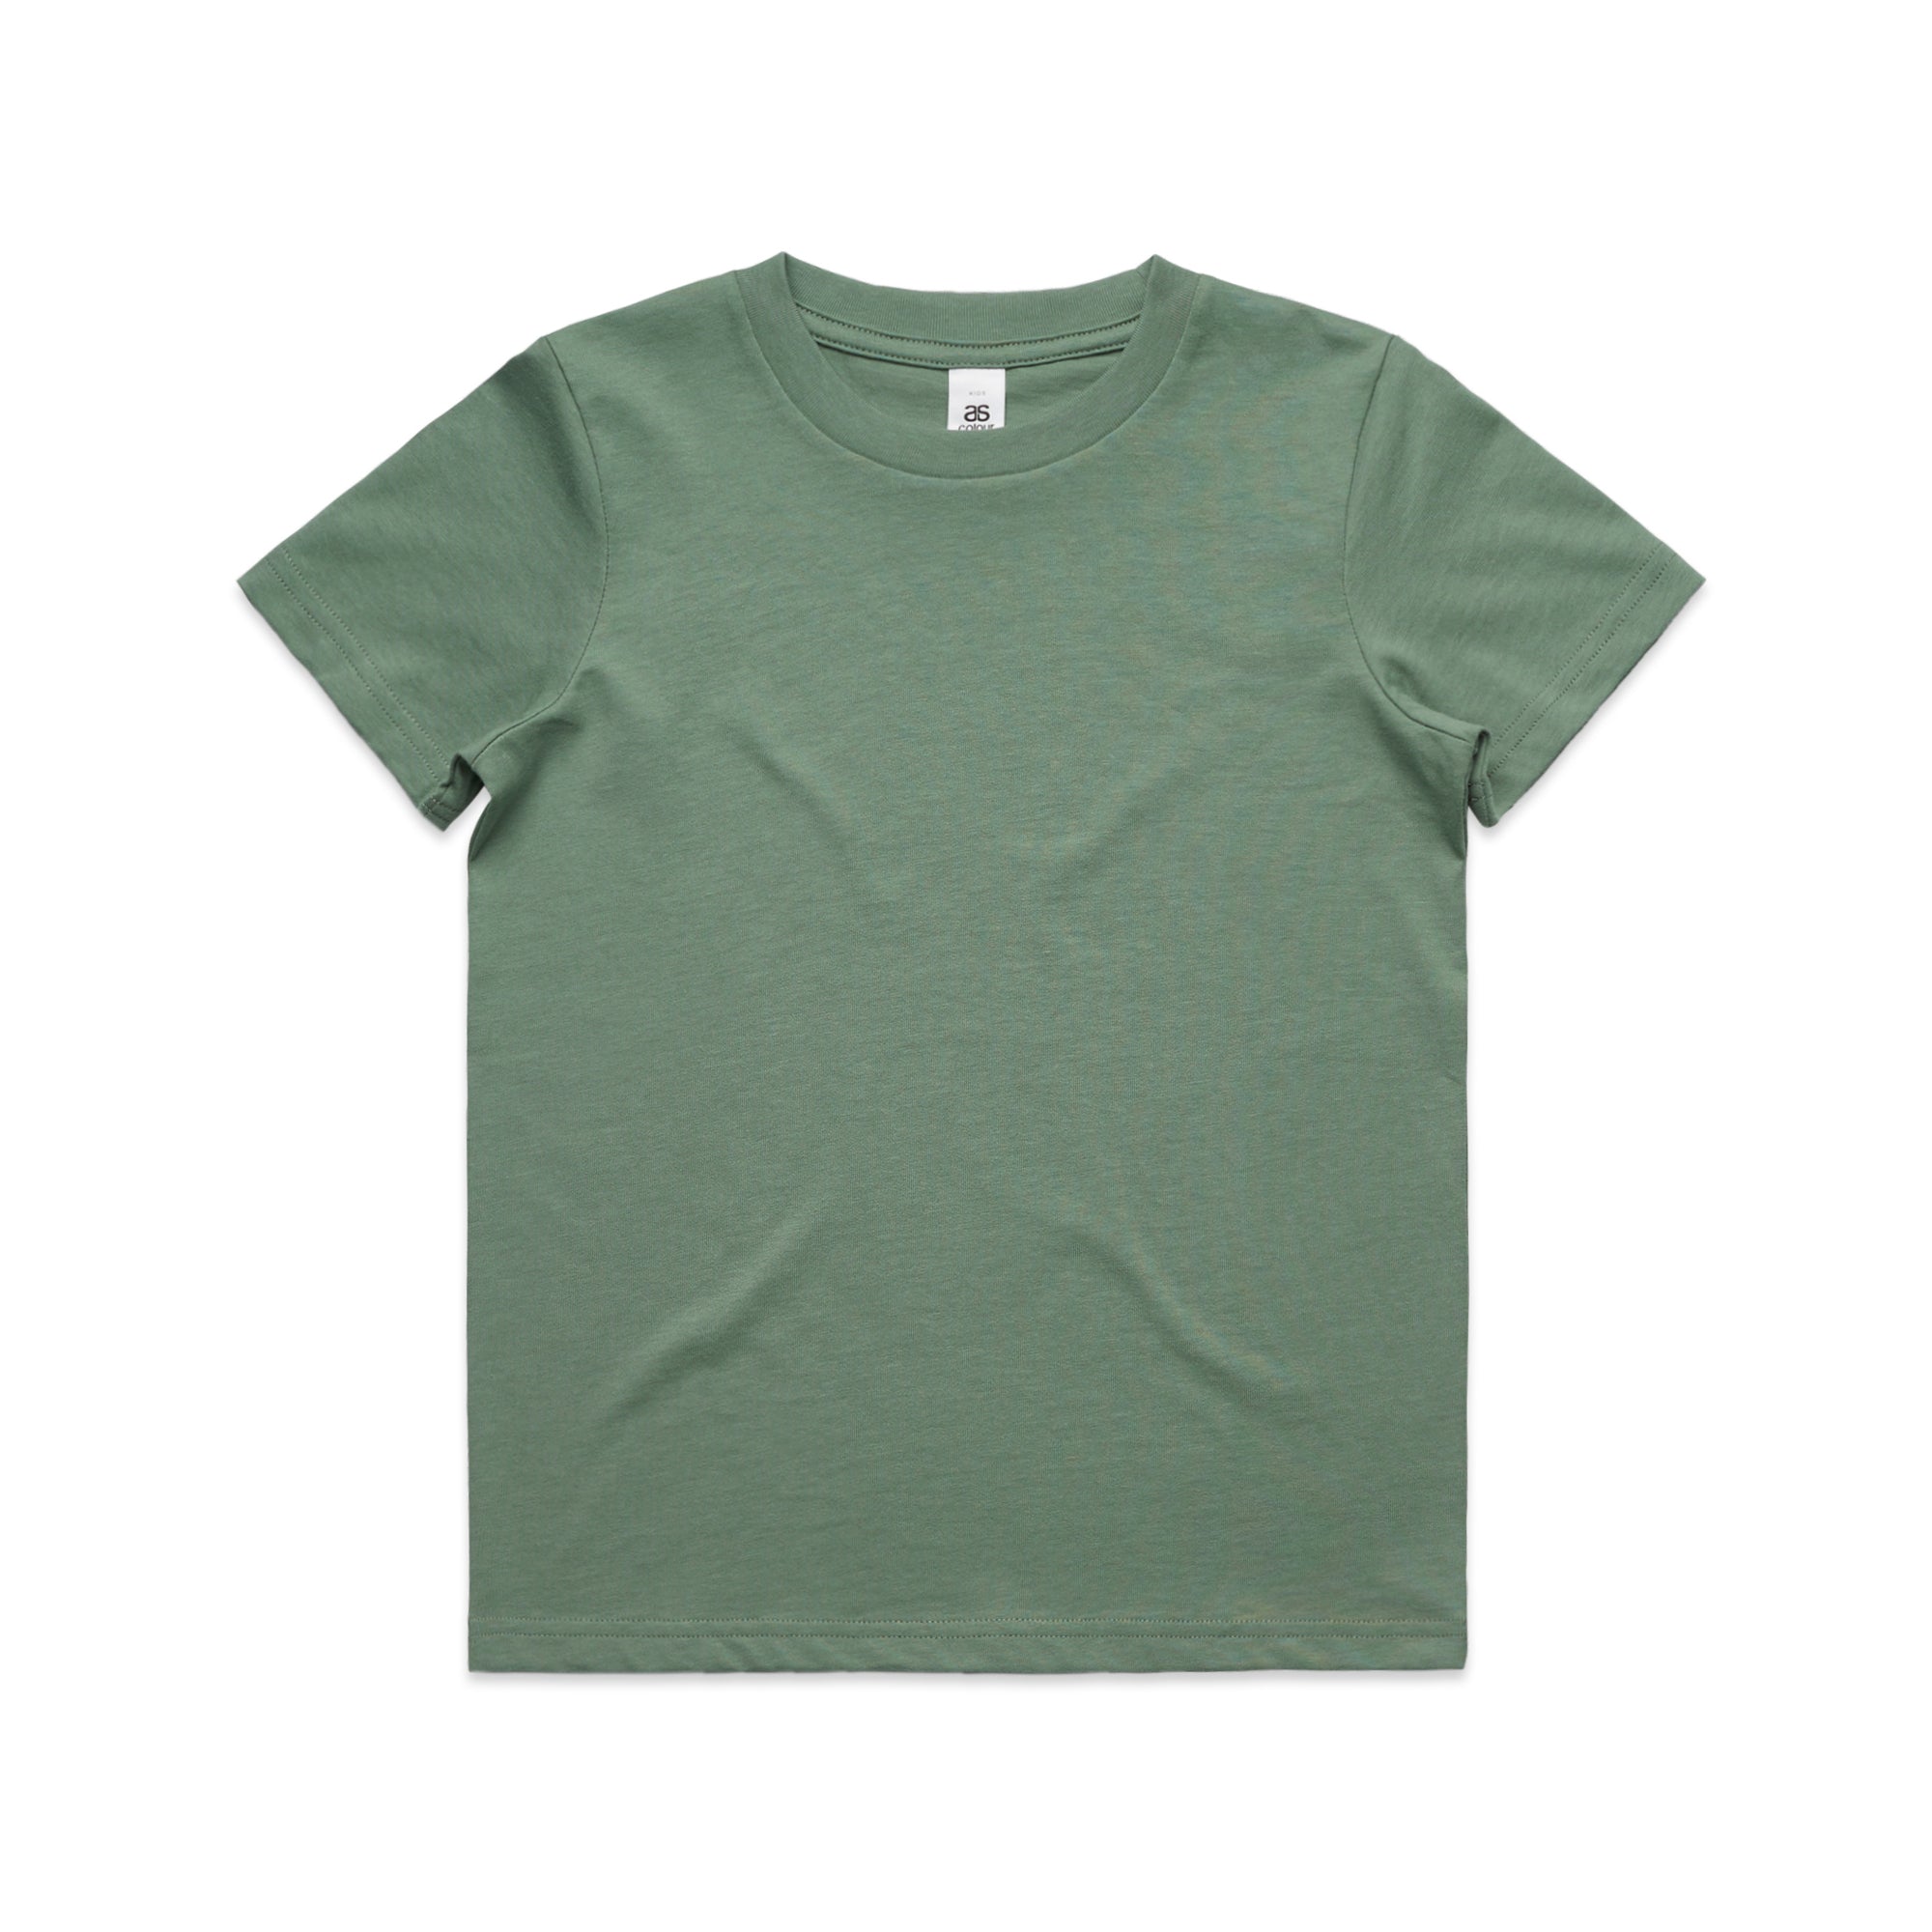 AS Colour T-Shirt | Year 8 Leavers Gear 2022